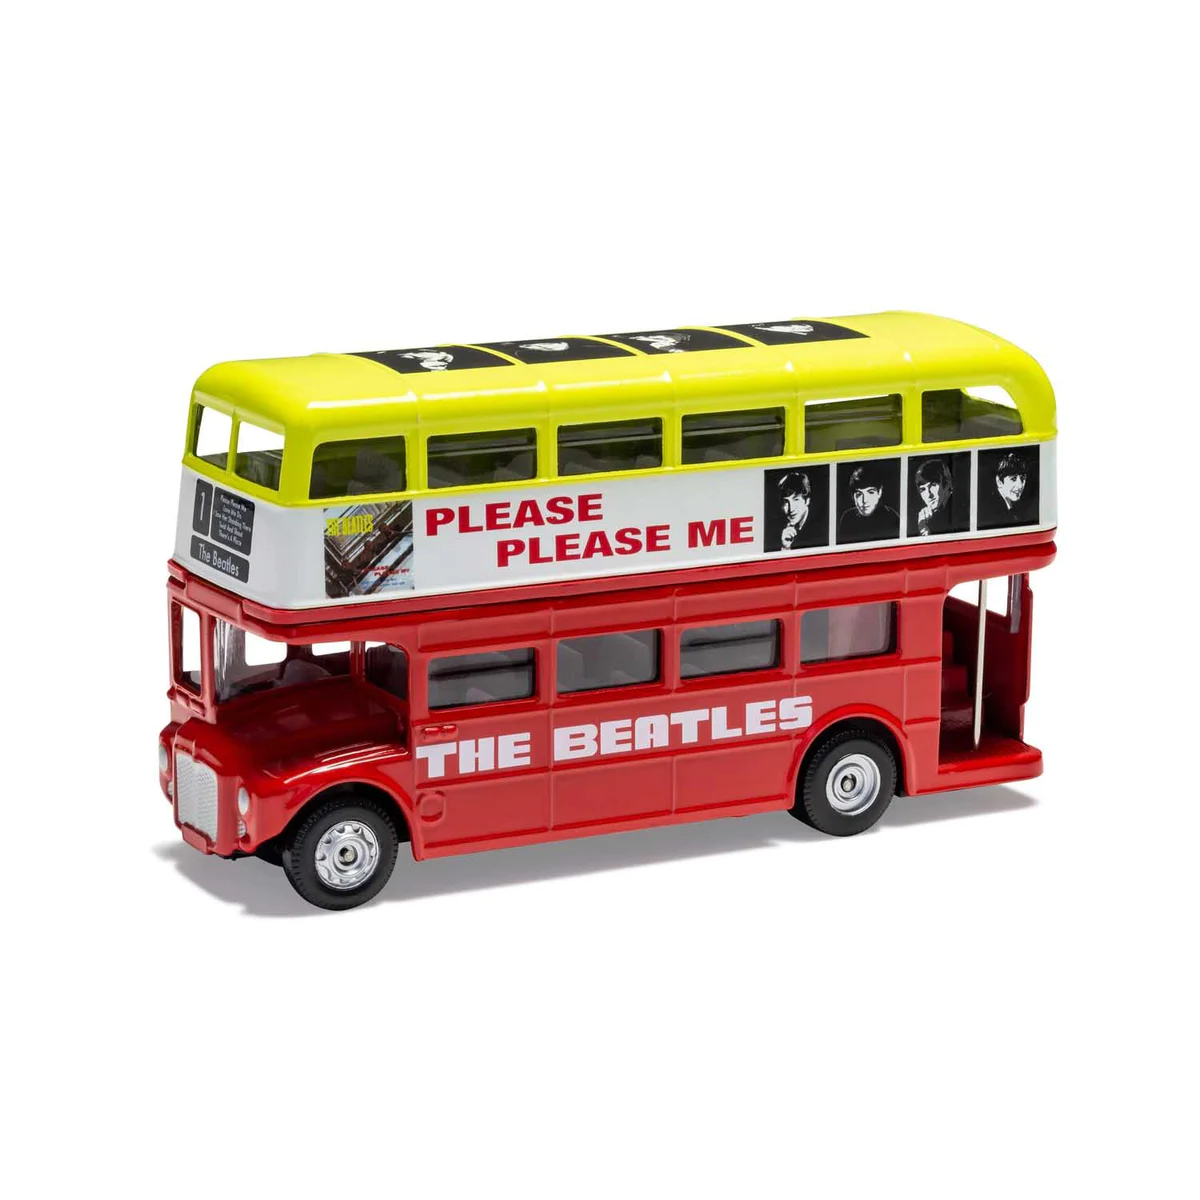 The Beatles - The Beatles - London Bus - Please Please Me